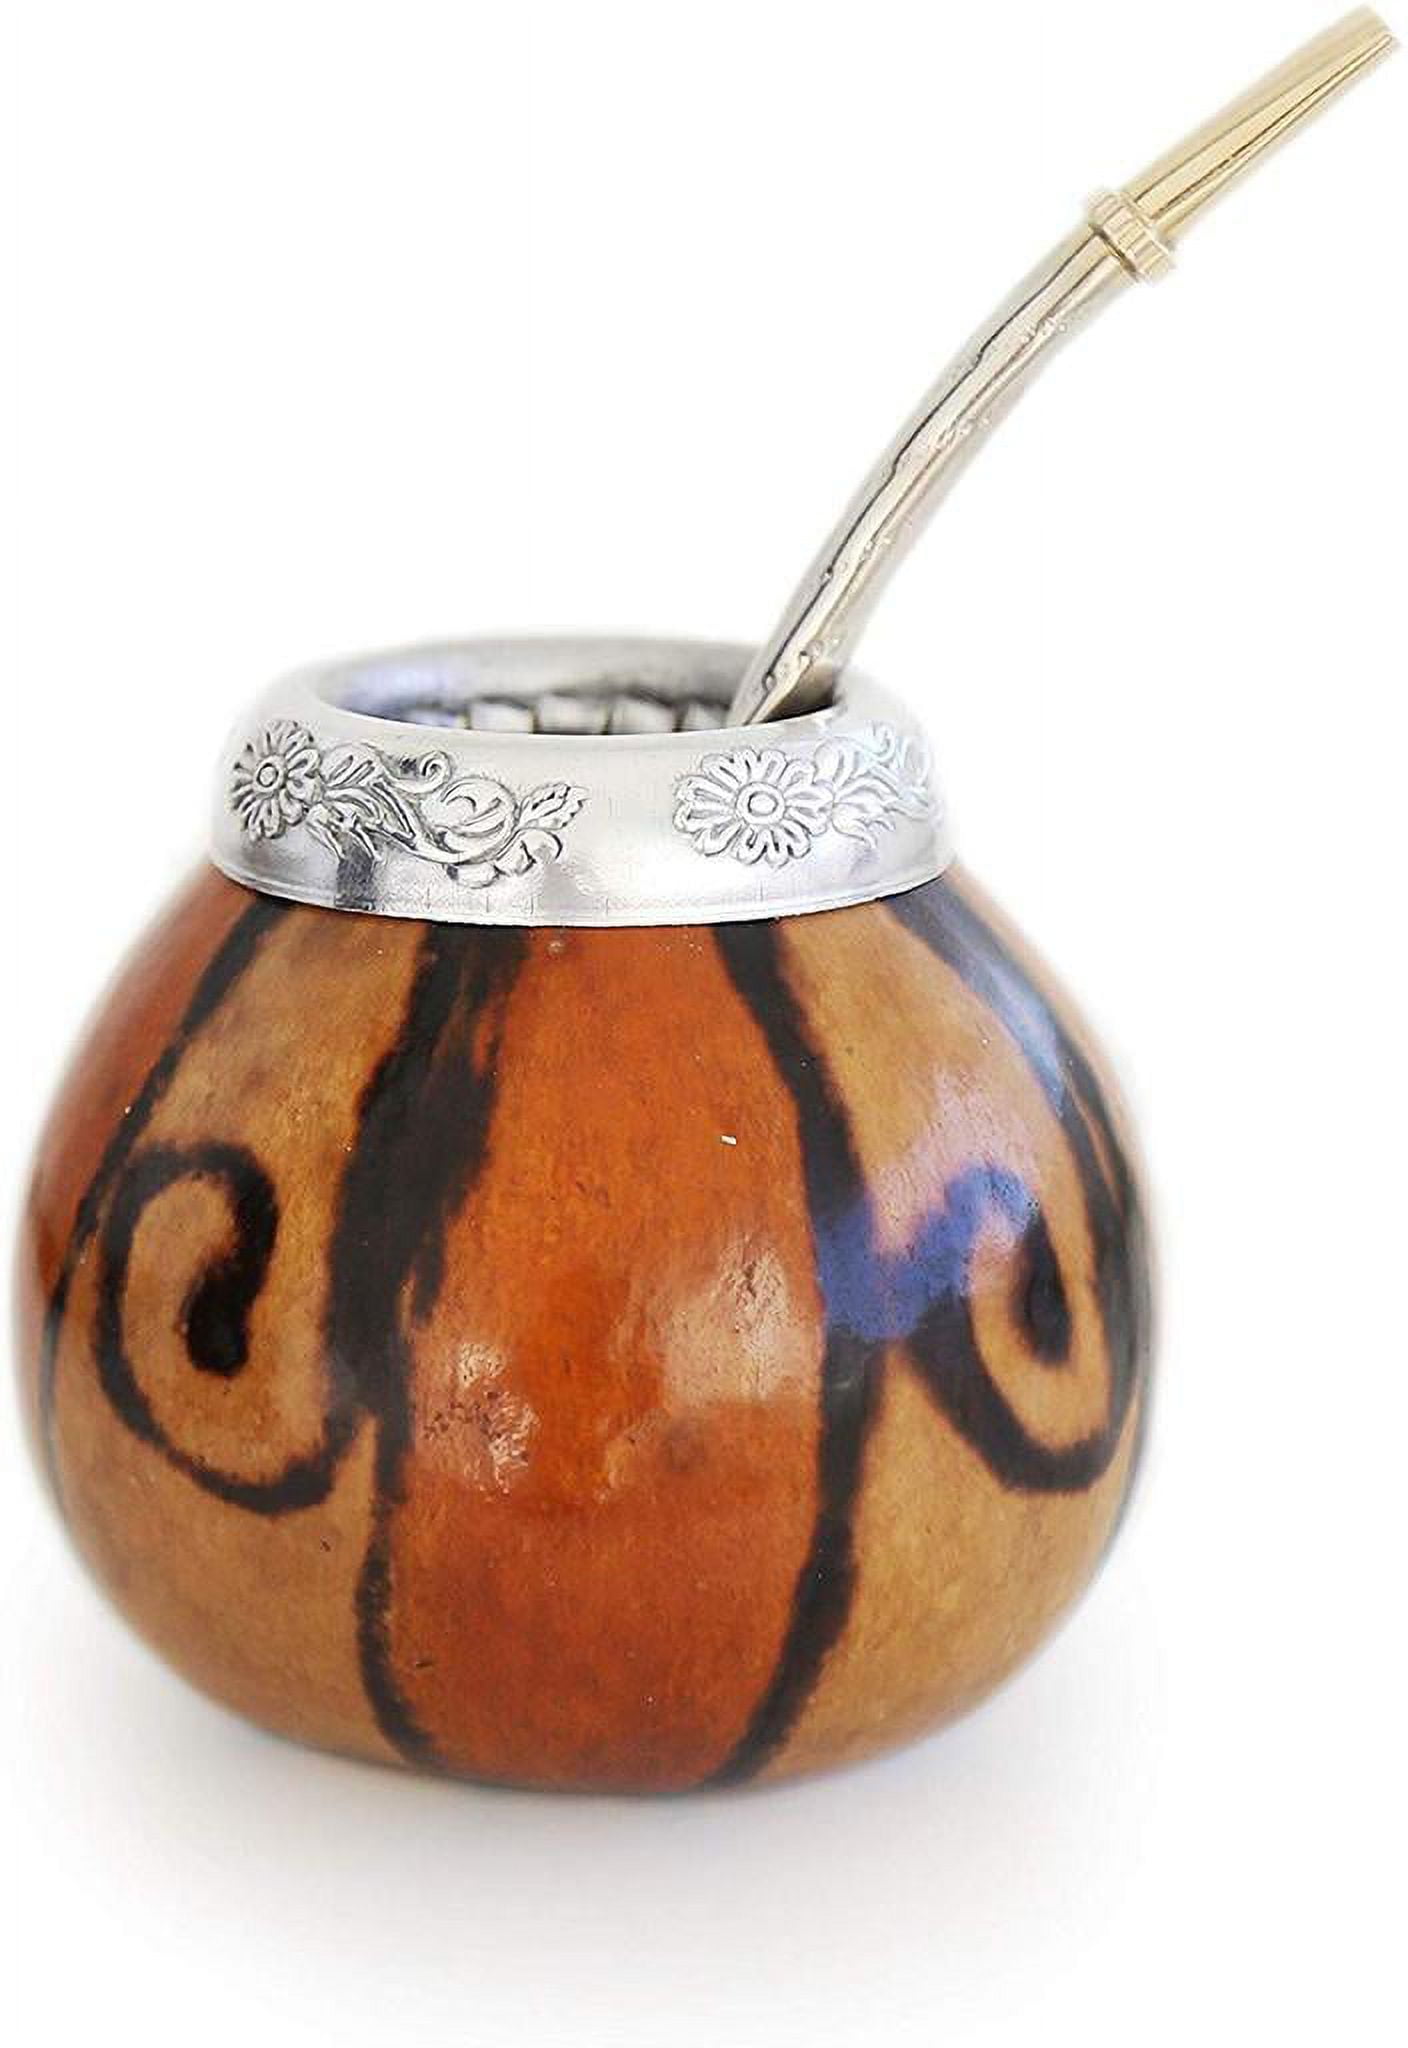 Balibetov Yerba Mate Gourd Set (Original Natural Handmade Yerba Mate Cup  Argentina) - Includes Mate Tea Cup, Bombilla (Yerba Mate Straw) and Clean